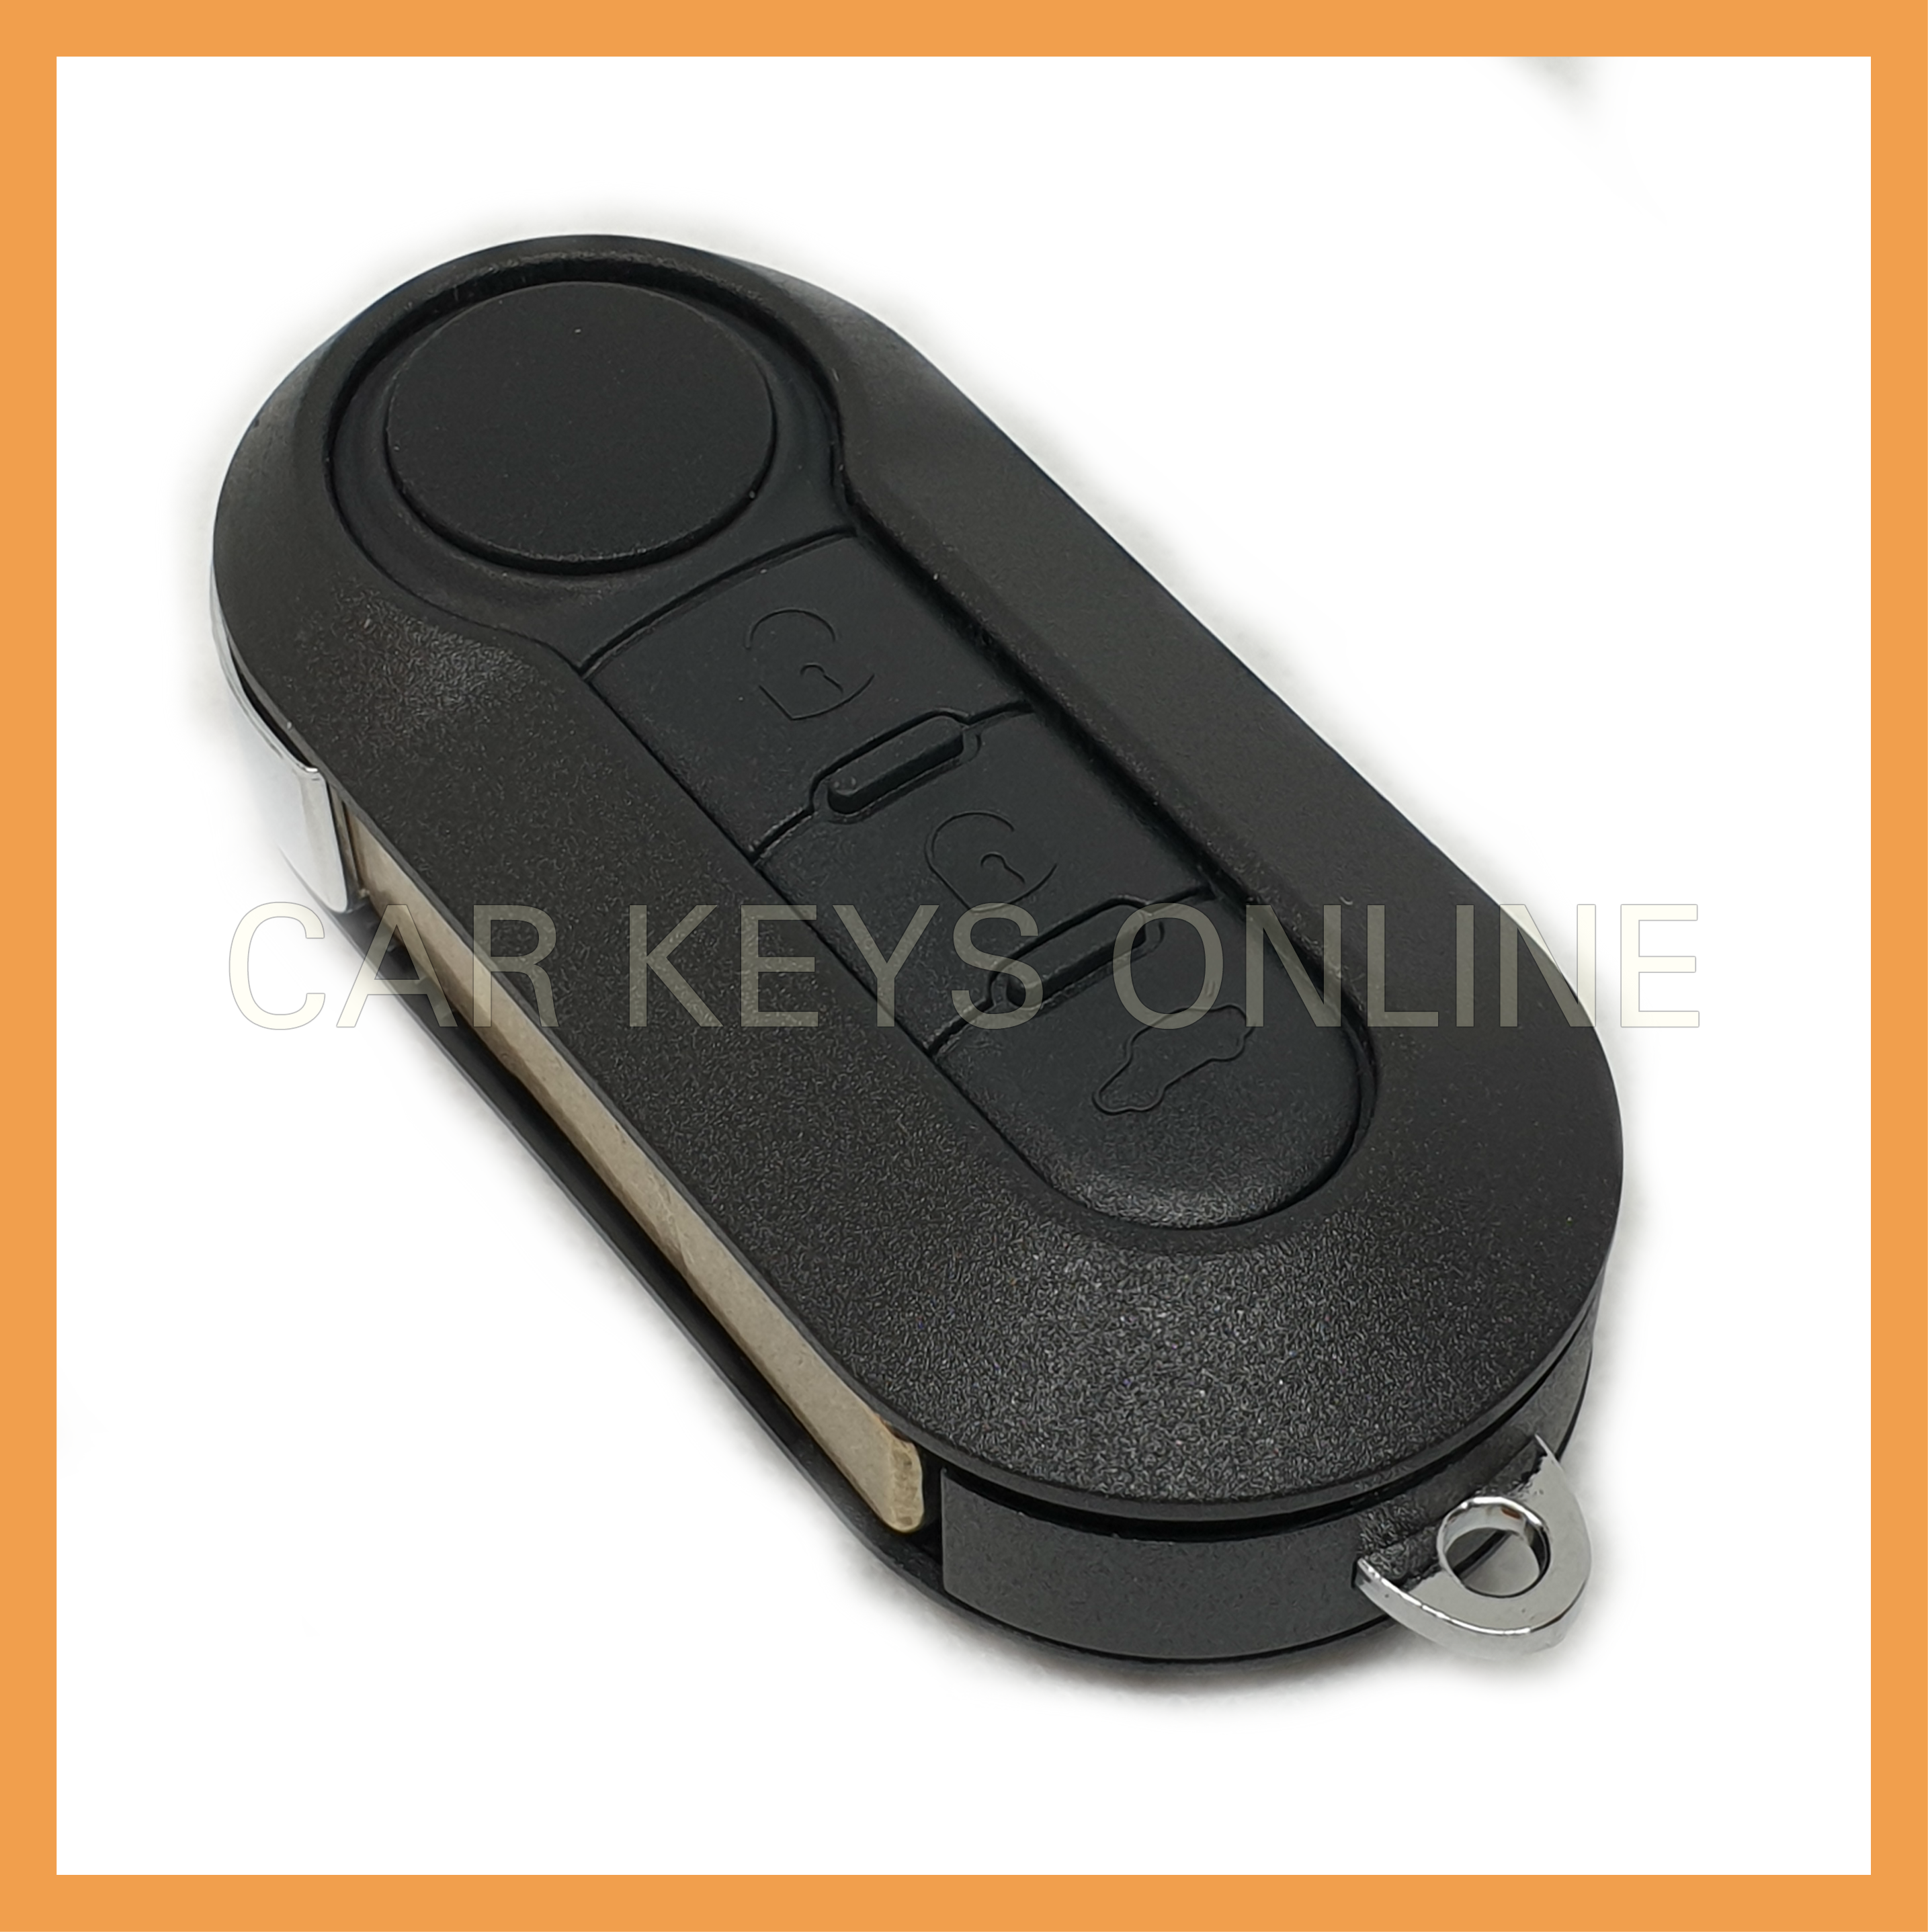 Aftermarket 3 Button Remote Key for Fiat (Delphi BSI)